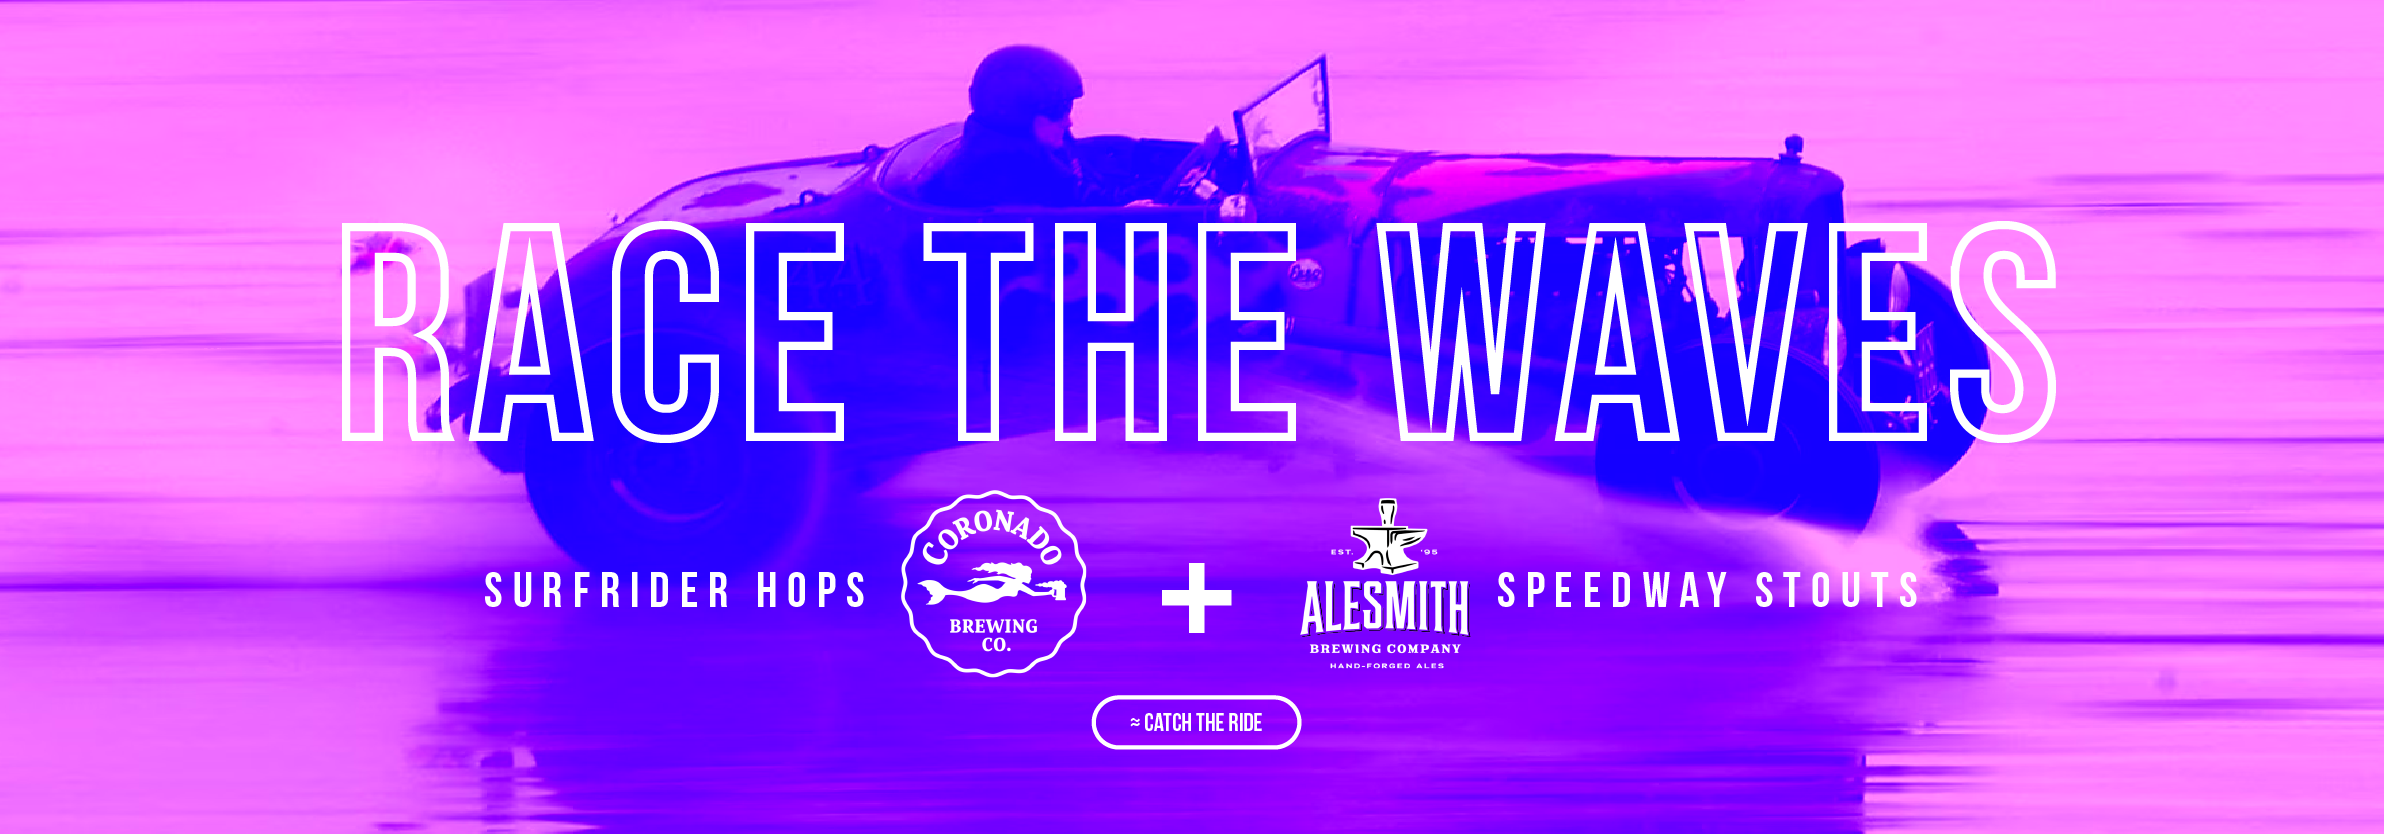 Race The Waves w/ AleSmith & Coronado